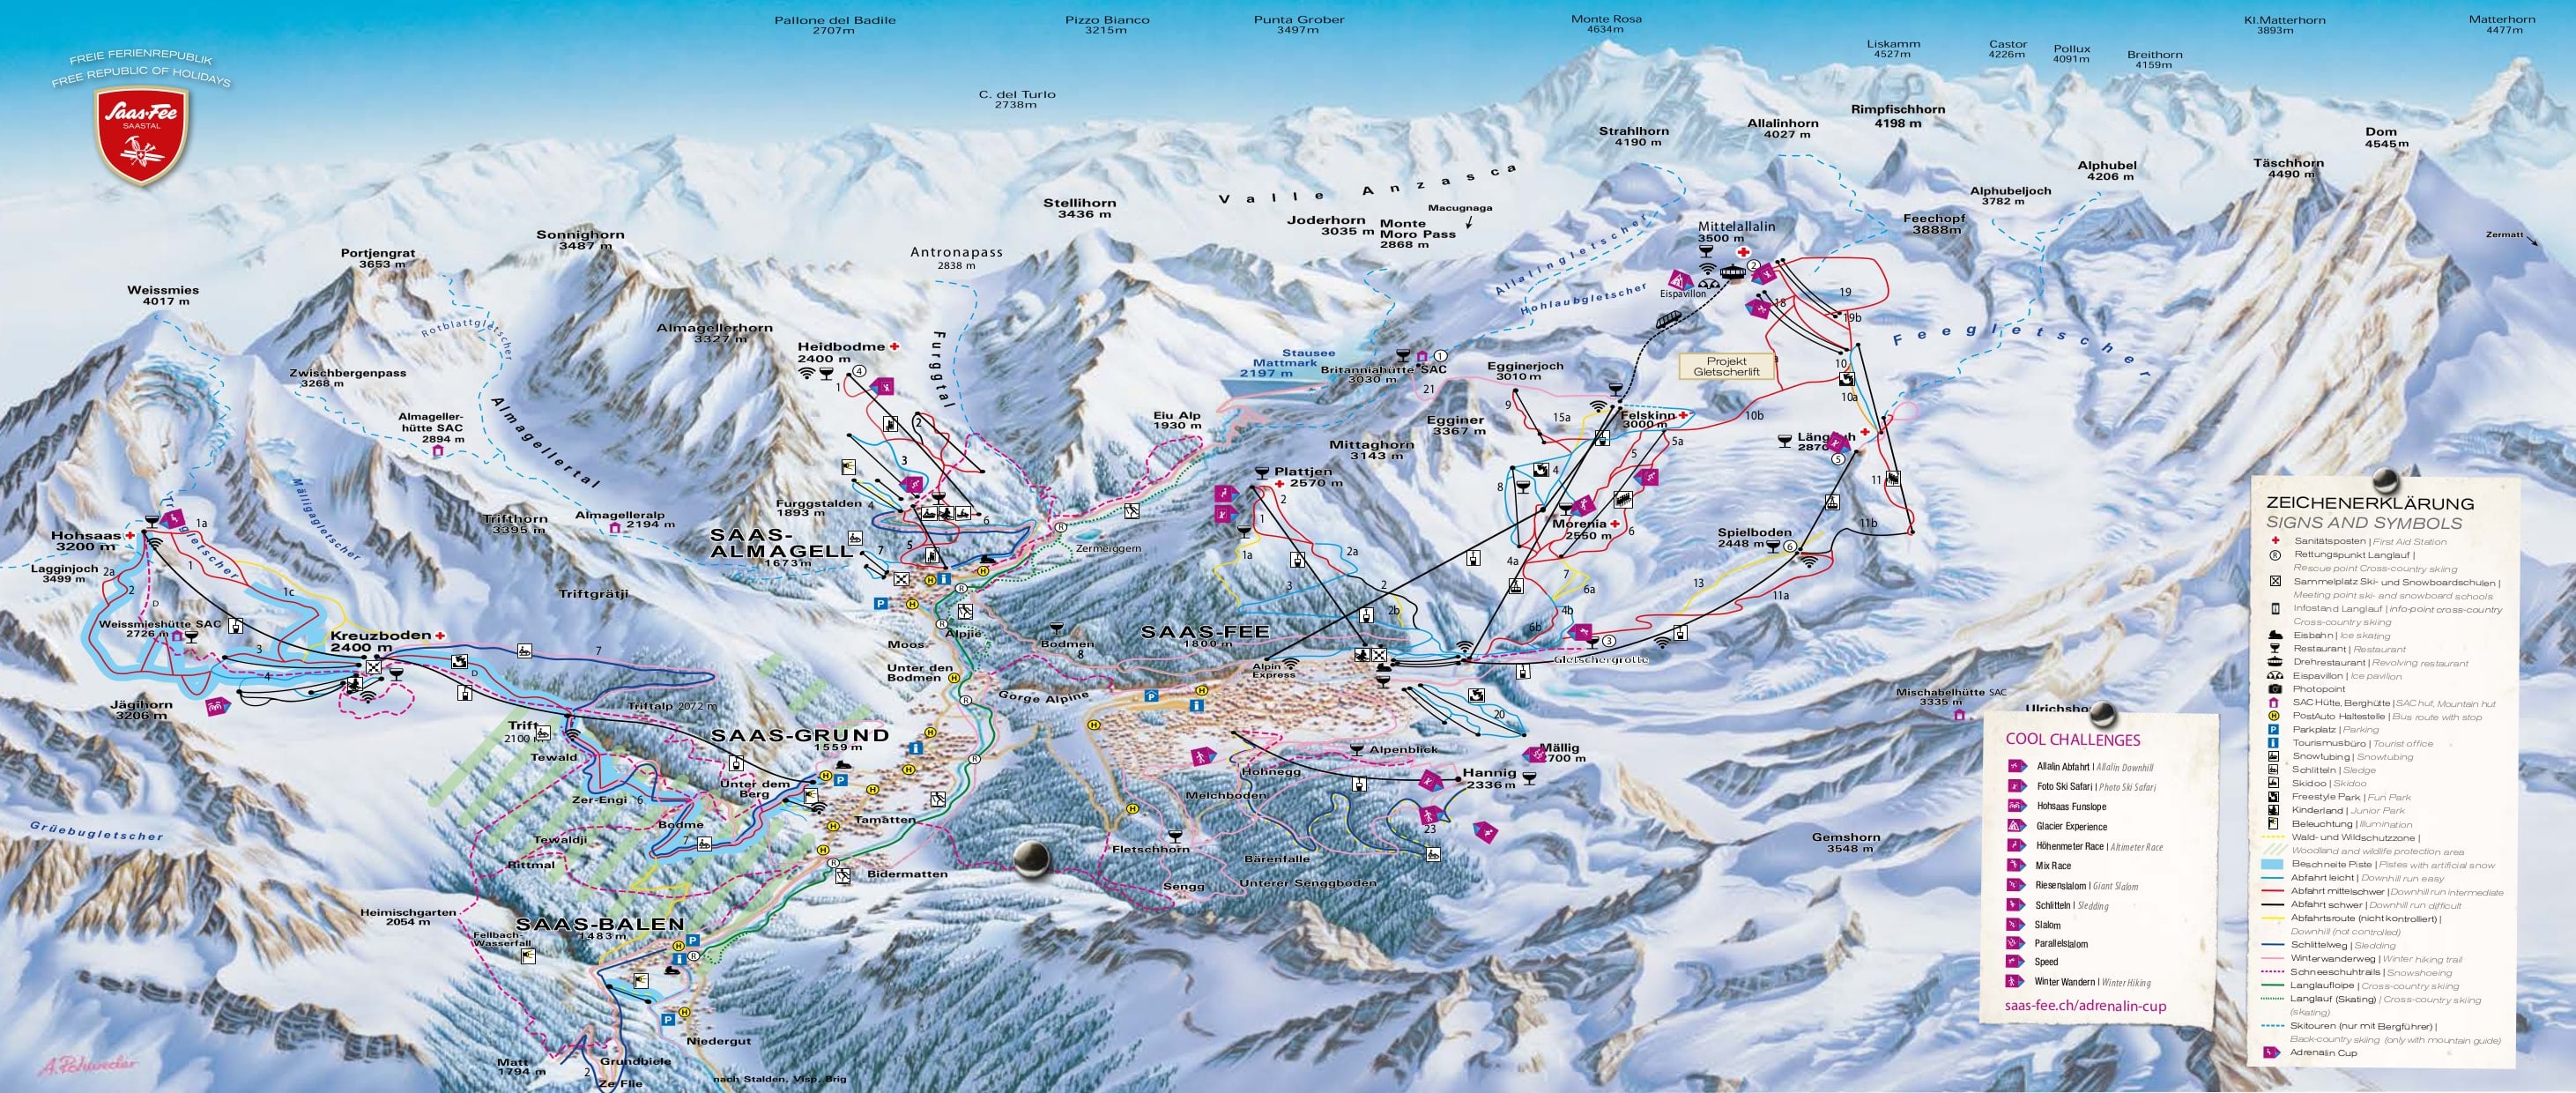 Saas Fee Piste Map 2019 - Ski Europe - winter ski vacation deals in